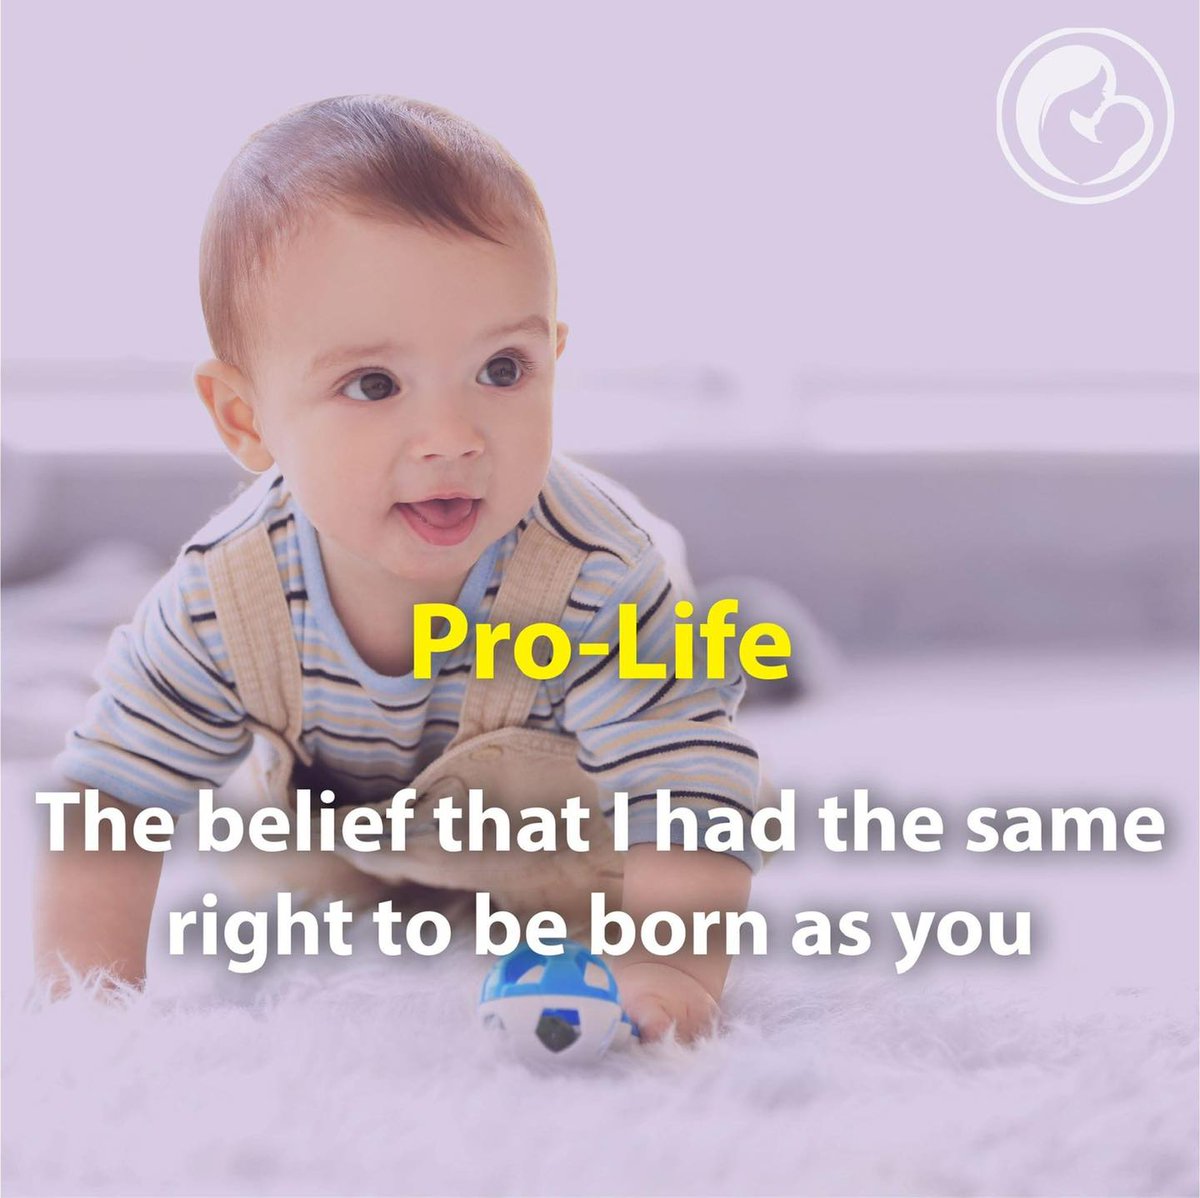 Simple as 

#ProLife #prolifegeneration #prolifefeminist #prolifegen #prolifemovement #unborn #unbornlivesmatter #unbornchild #unbornbaby #unbornrights #preborn #trump #prebornlivesmatter #prebornblacklivesmatter #prebornbabies #prebornfeelspain #baby #newborn